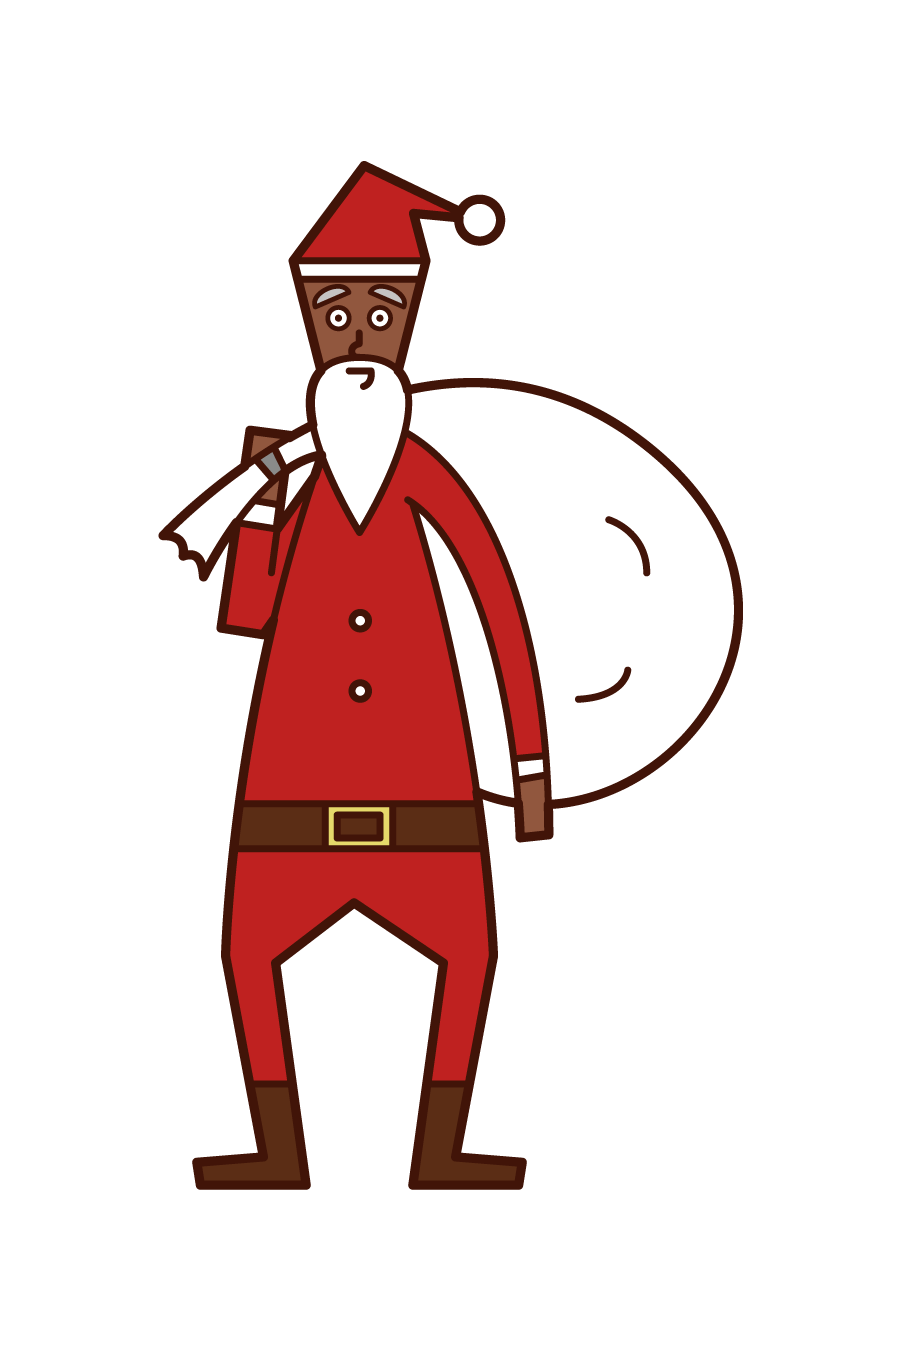 Illustration of Santa Claus with a big bag